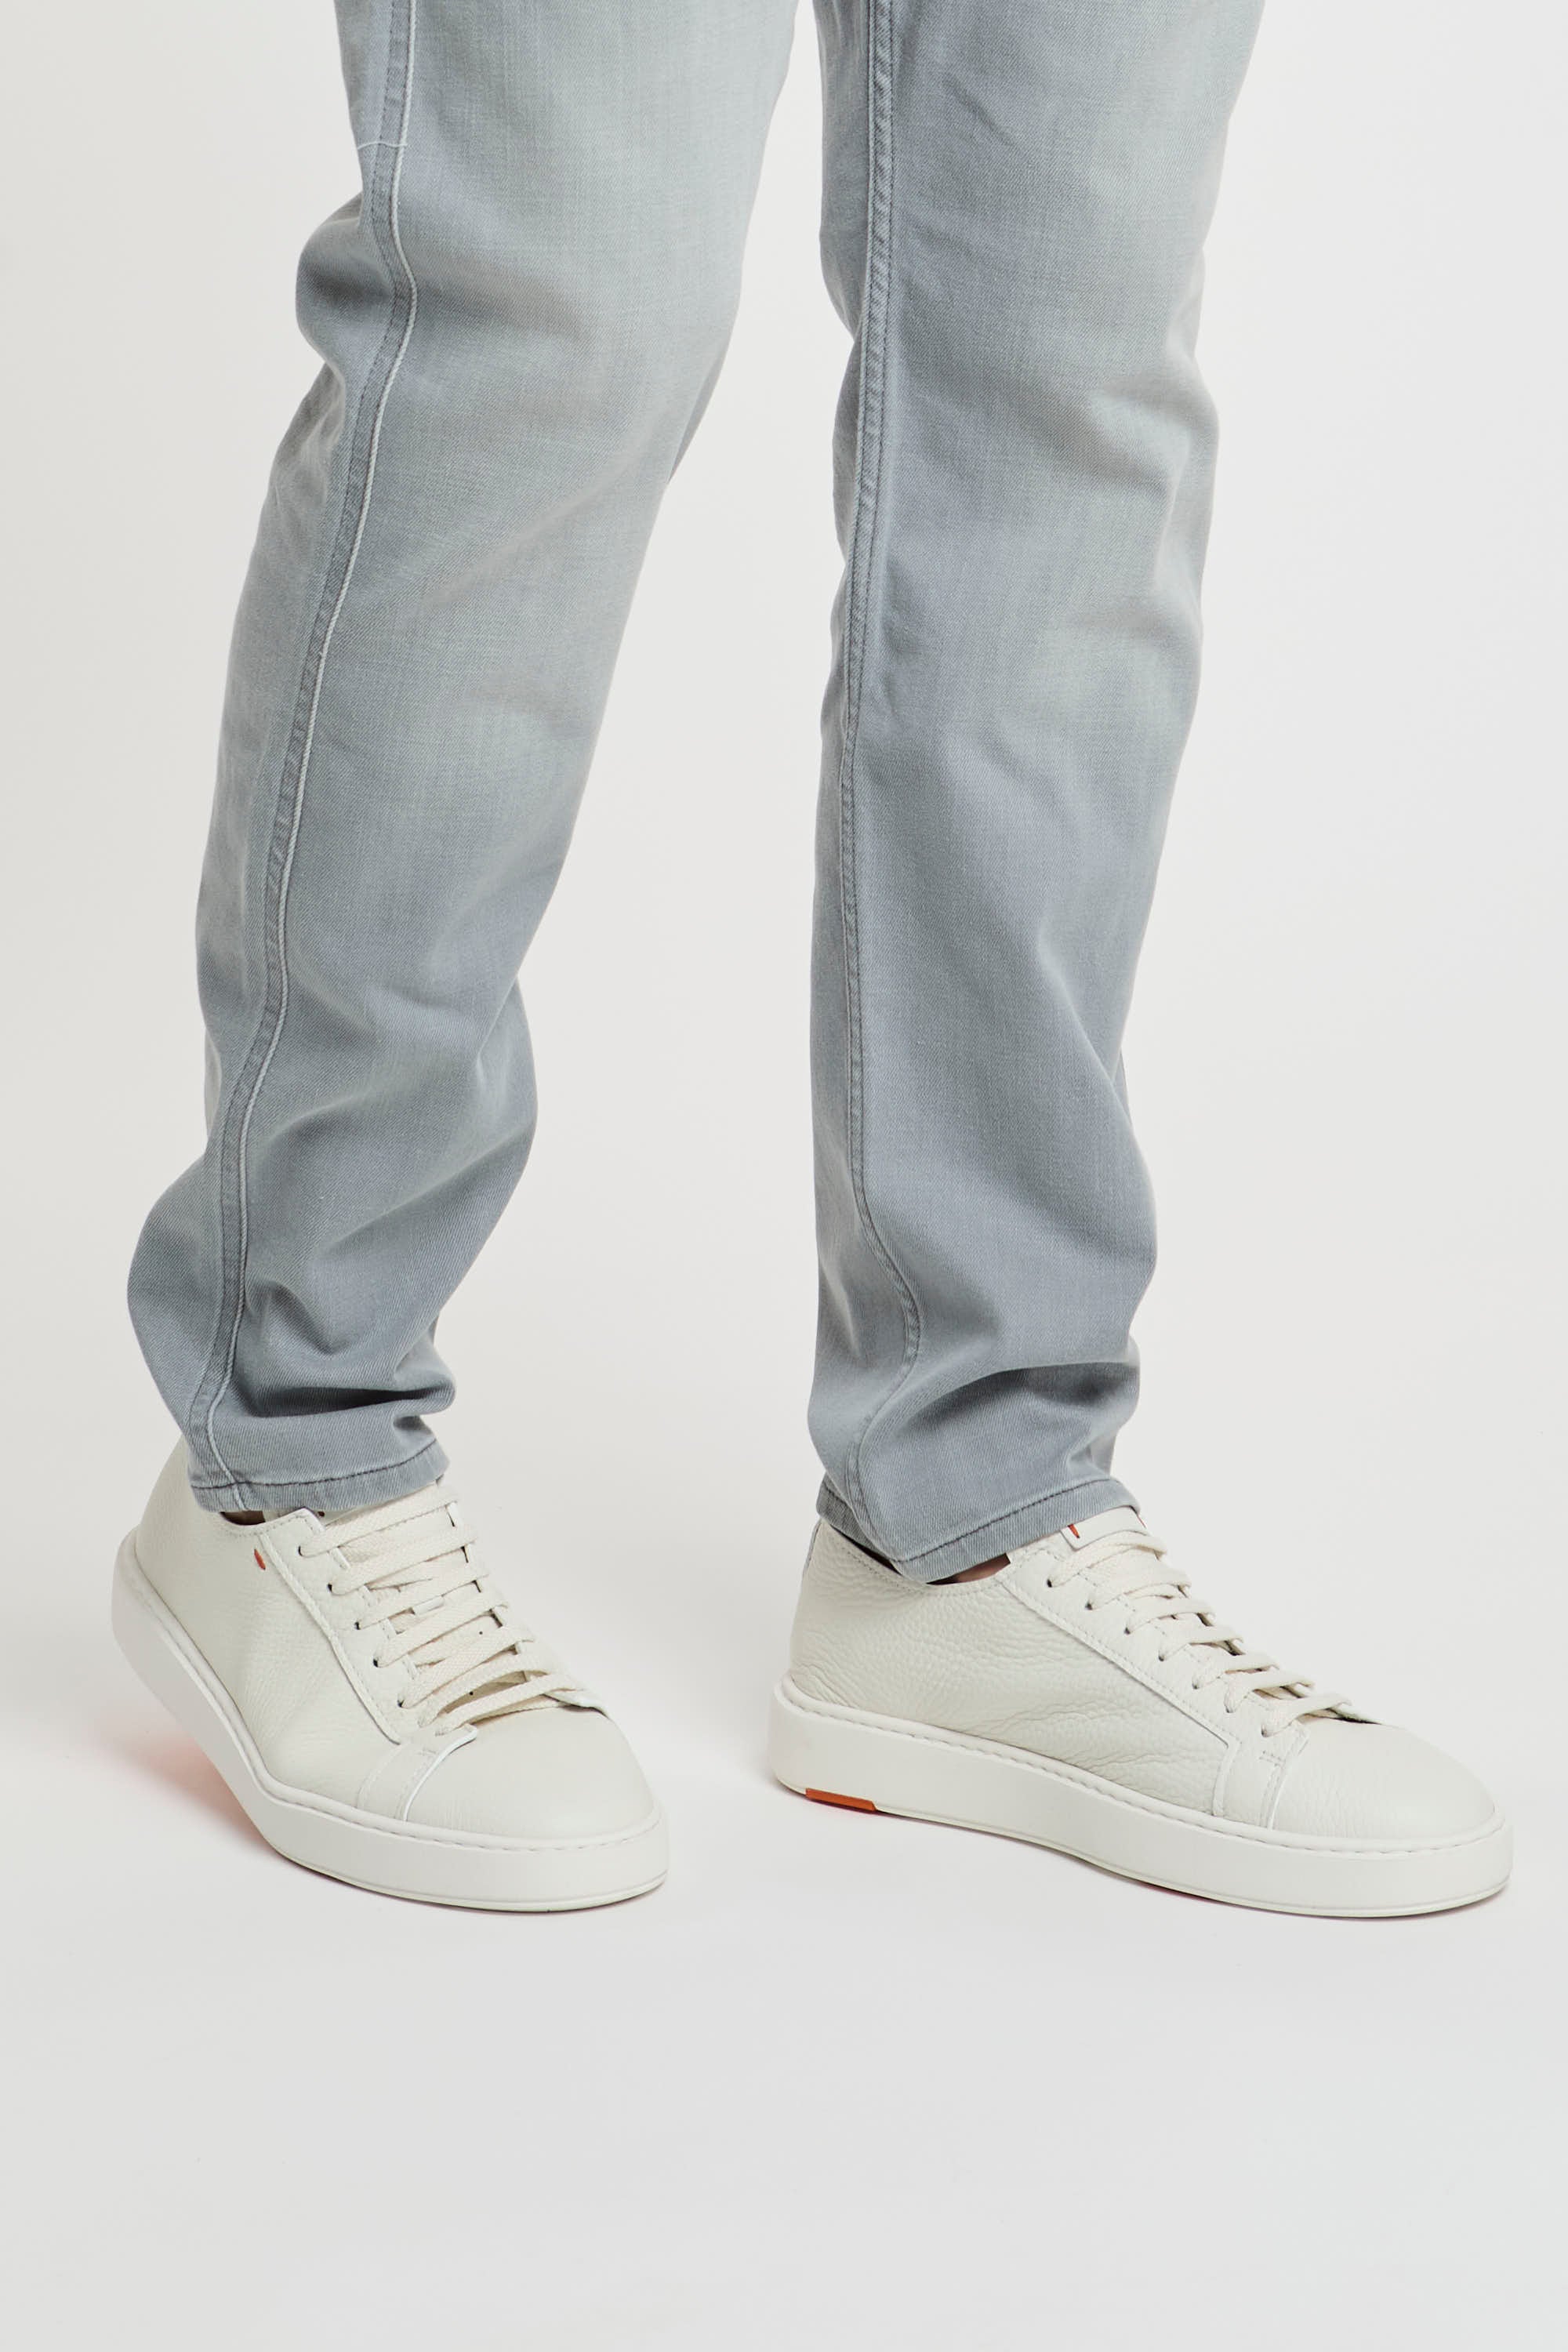 Replay Slim Fit Jeans Anbass Cotton/Elastane Light Grey-7